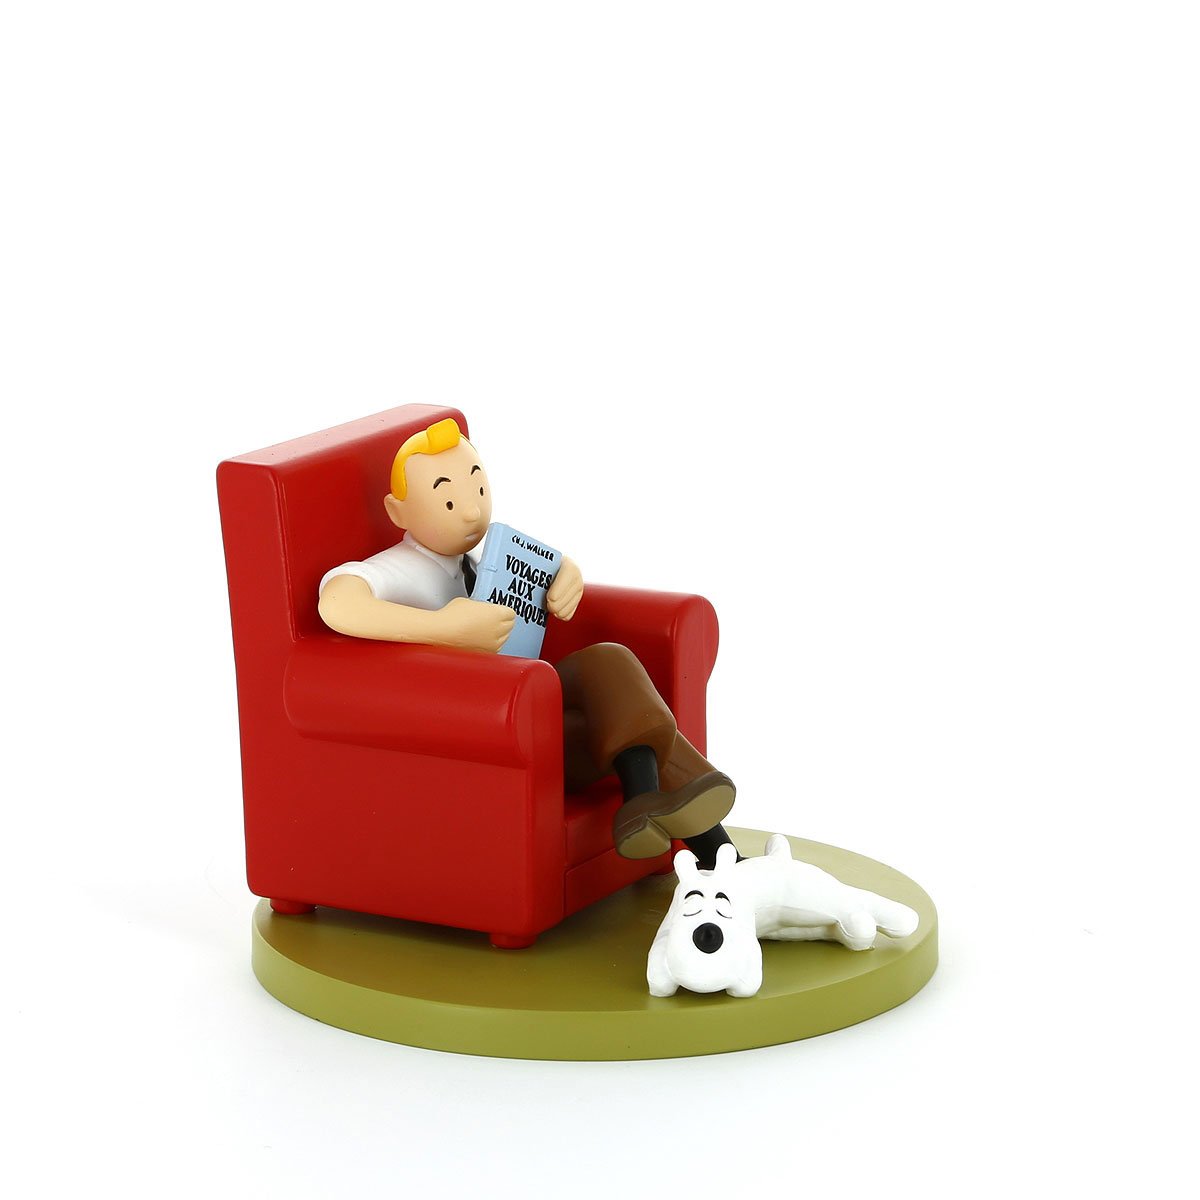 Tintin dans son fauteuil